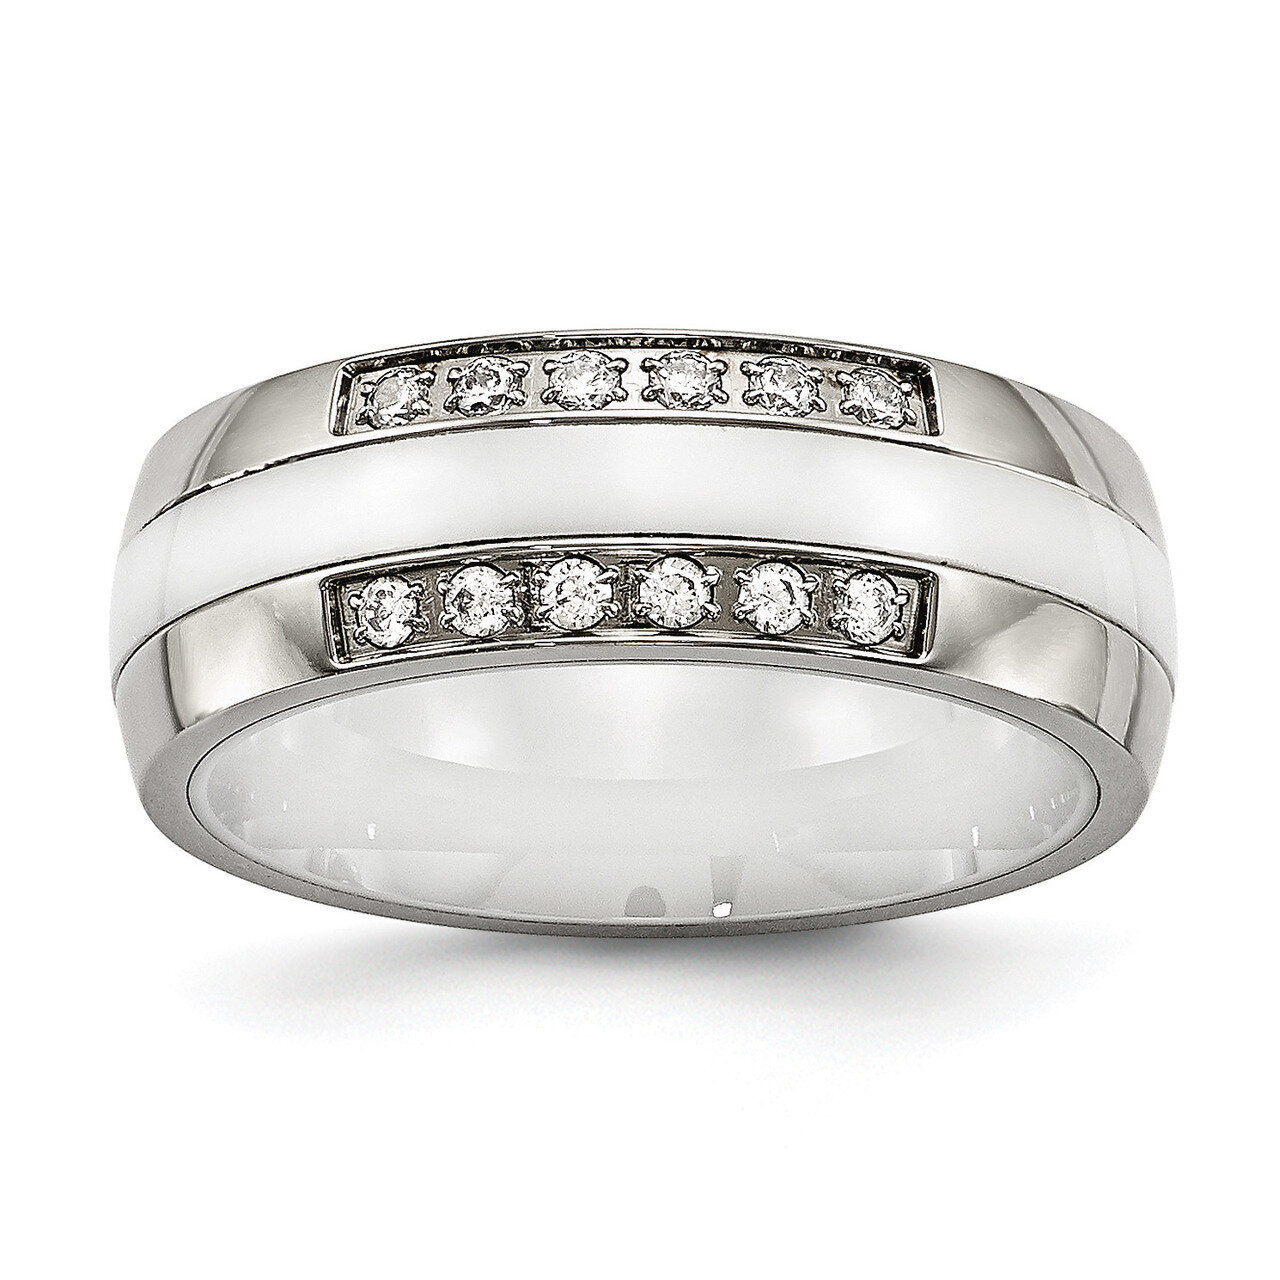 White Ceramic CZ Diamond Ring Stainless Steel Polished SR562